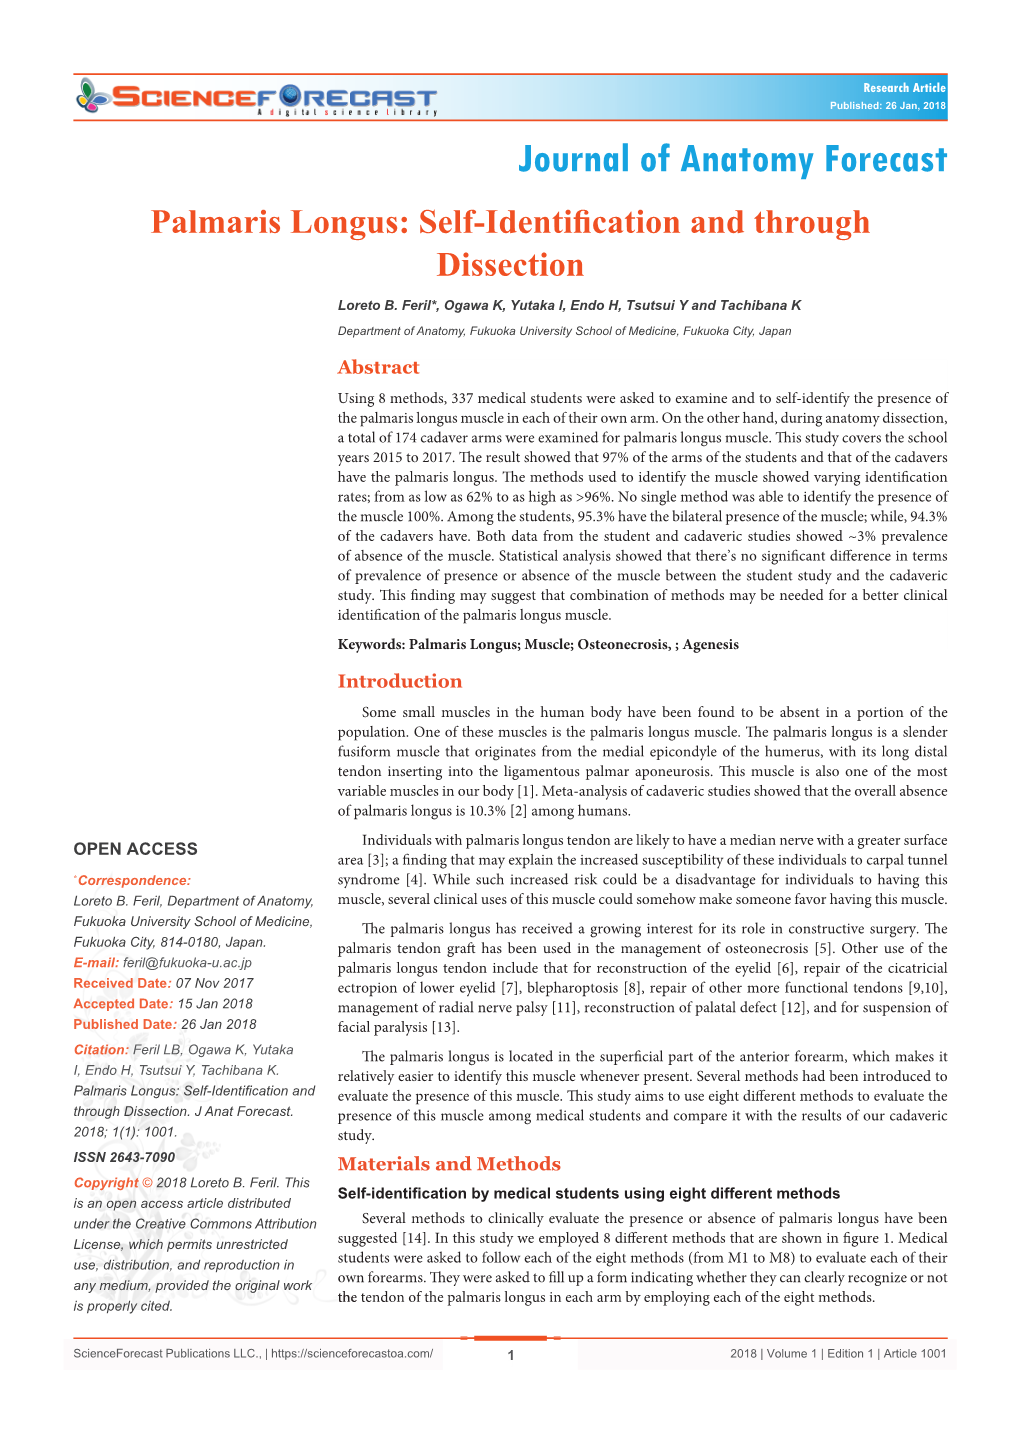 Palmaris Longus: Self-Identification and Through Dissection